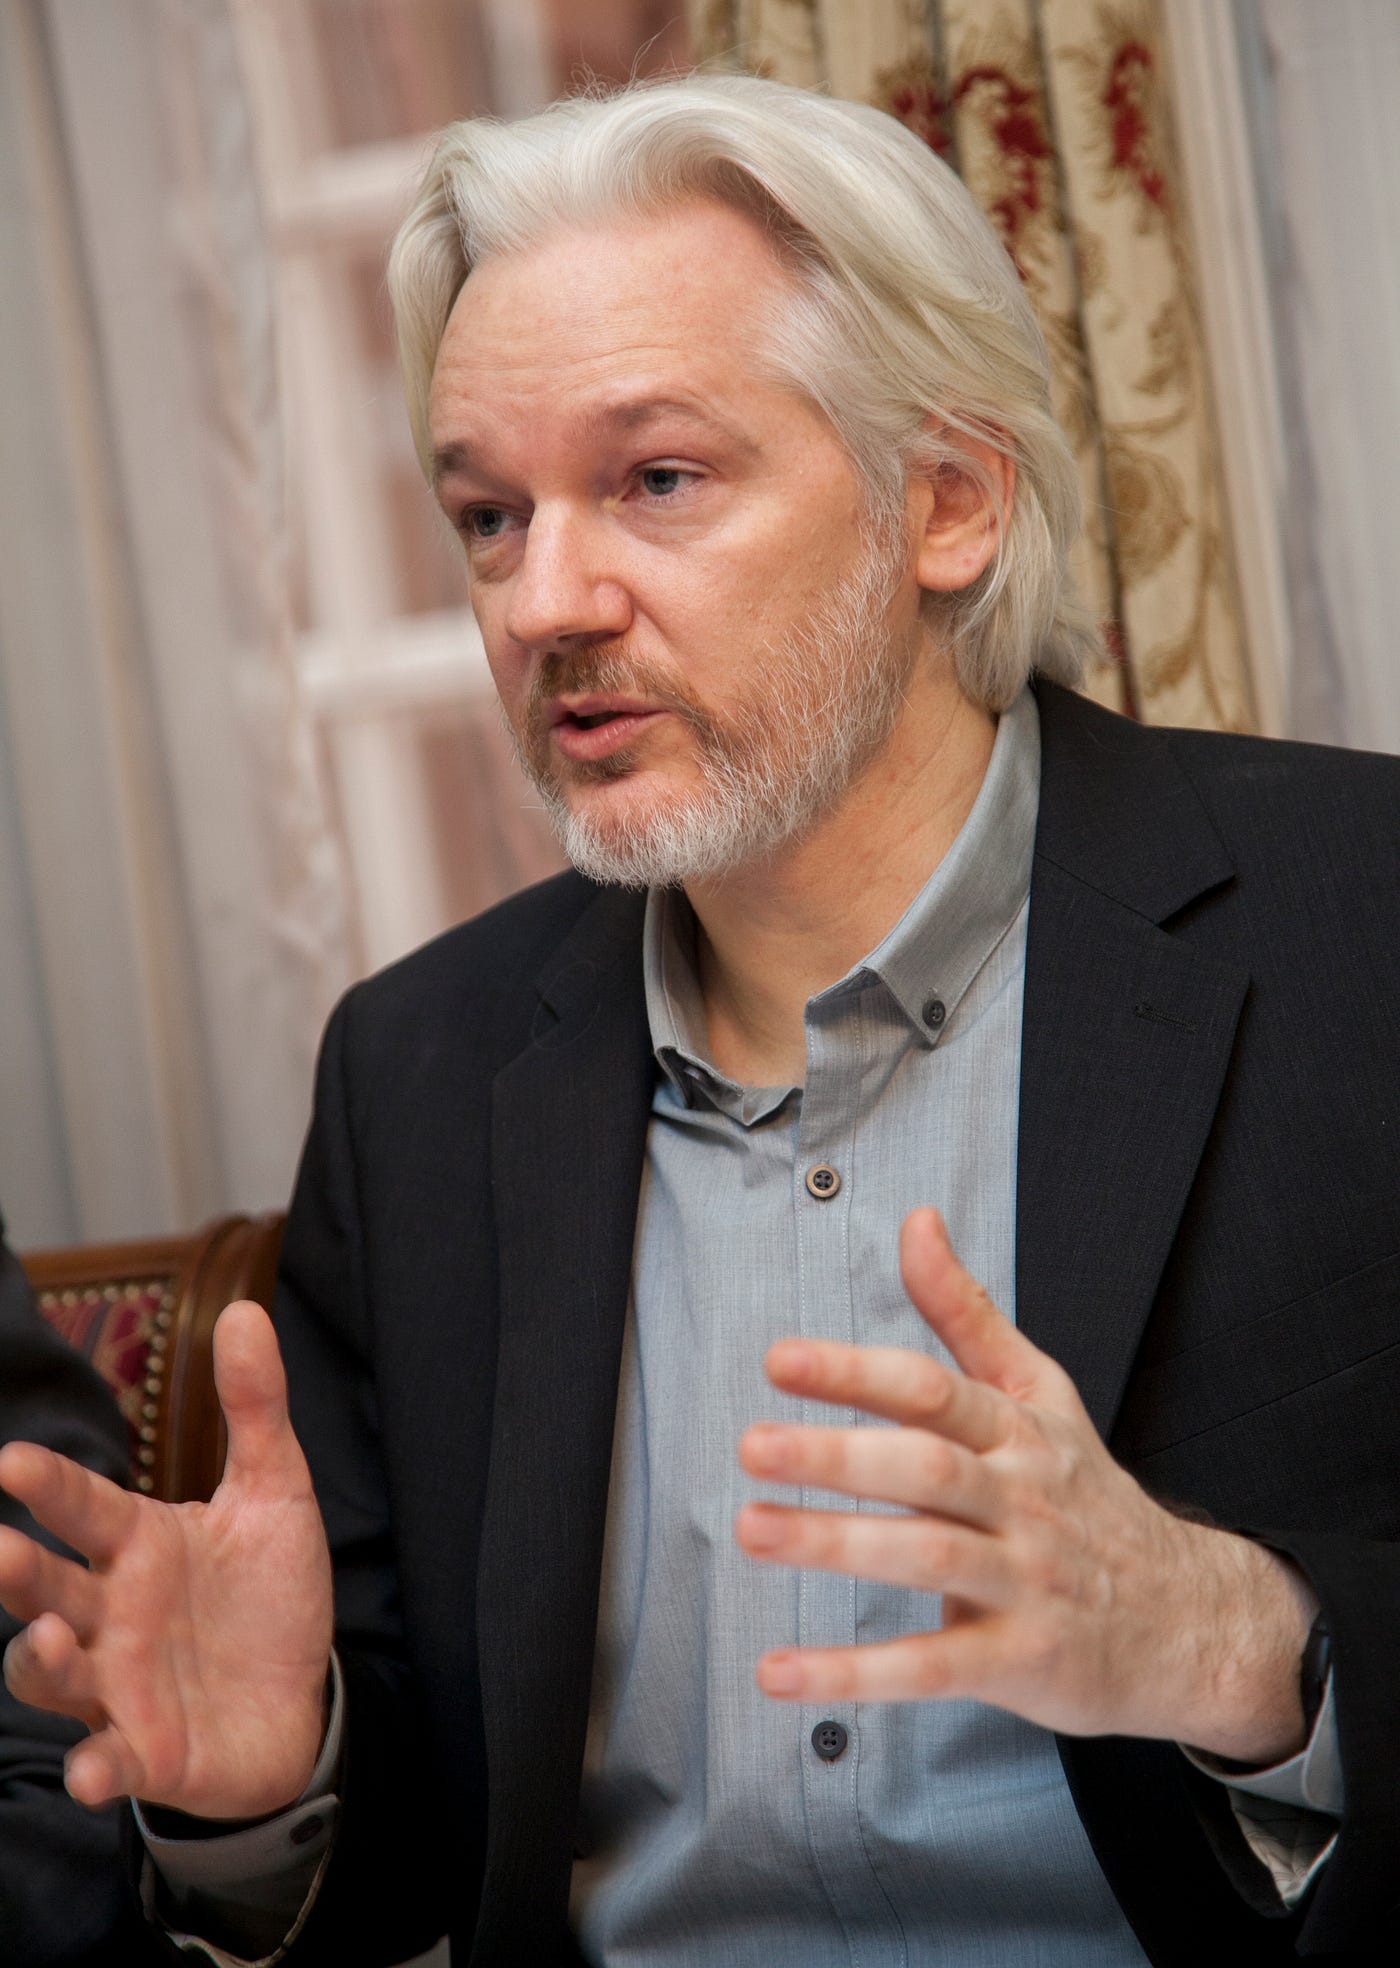 Demasking the Torture of Julian Assange | by Nils Melzer | Medium